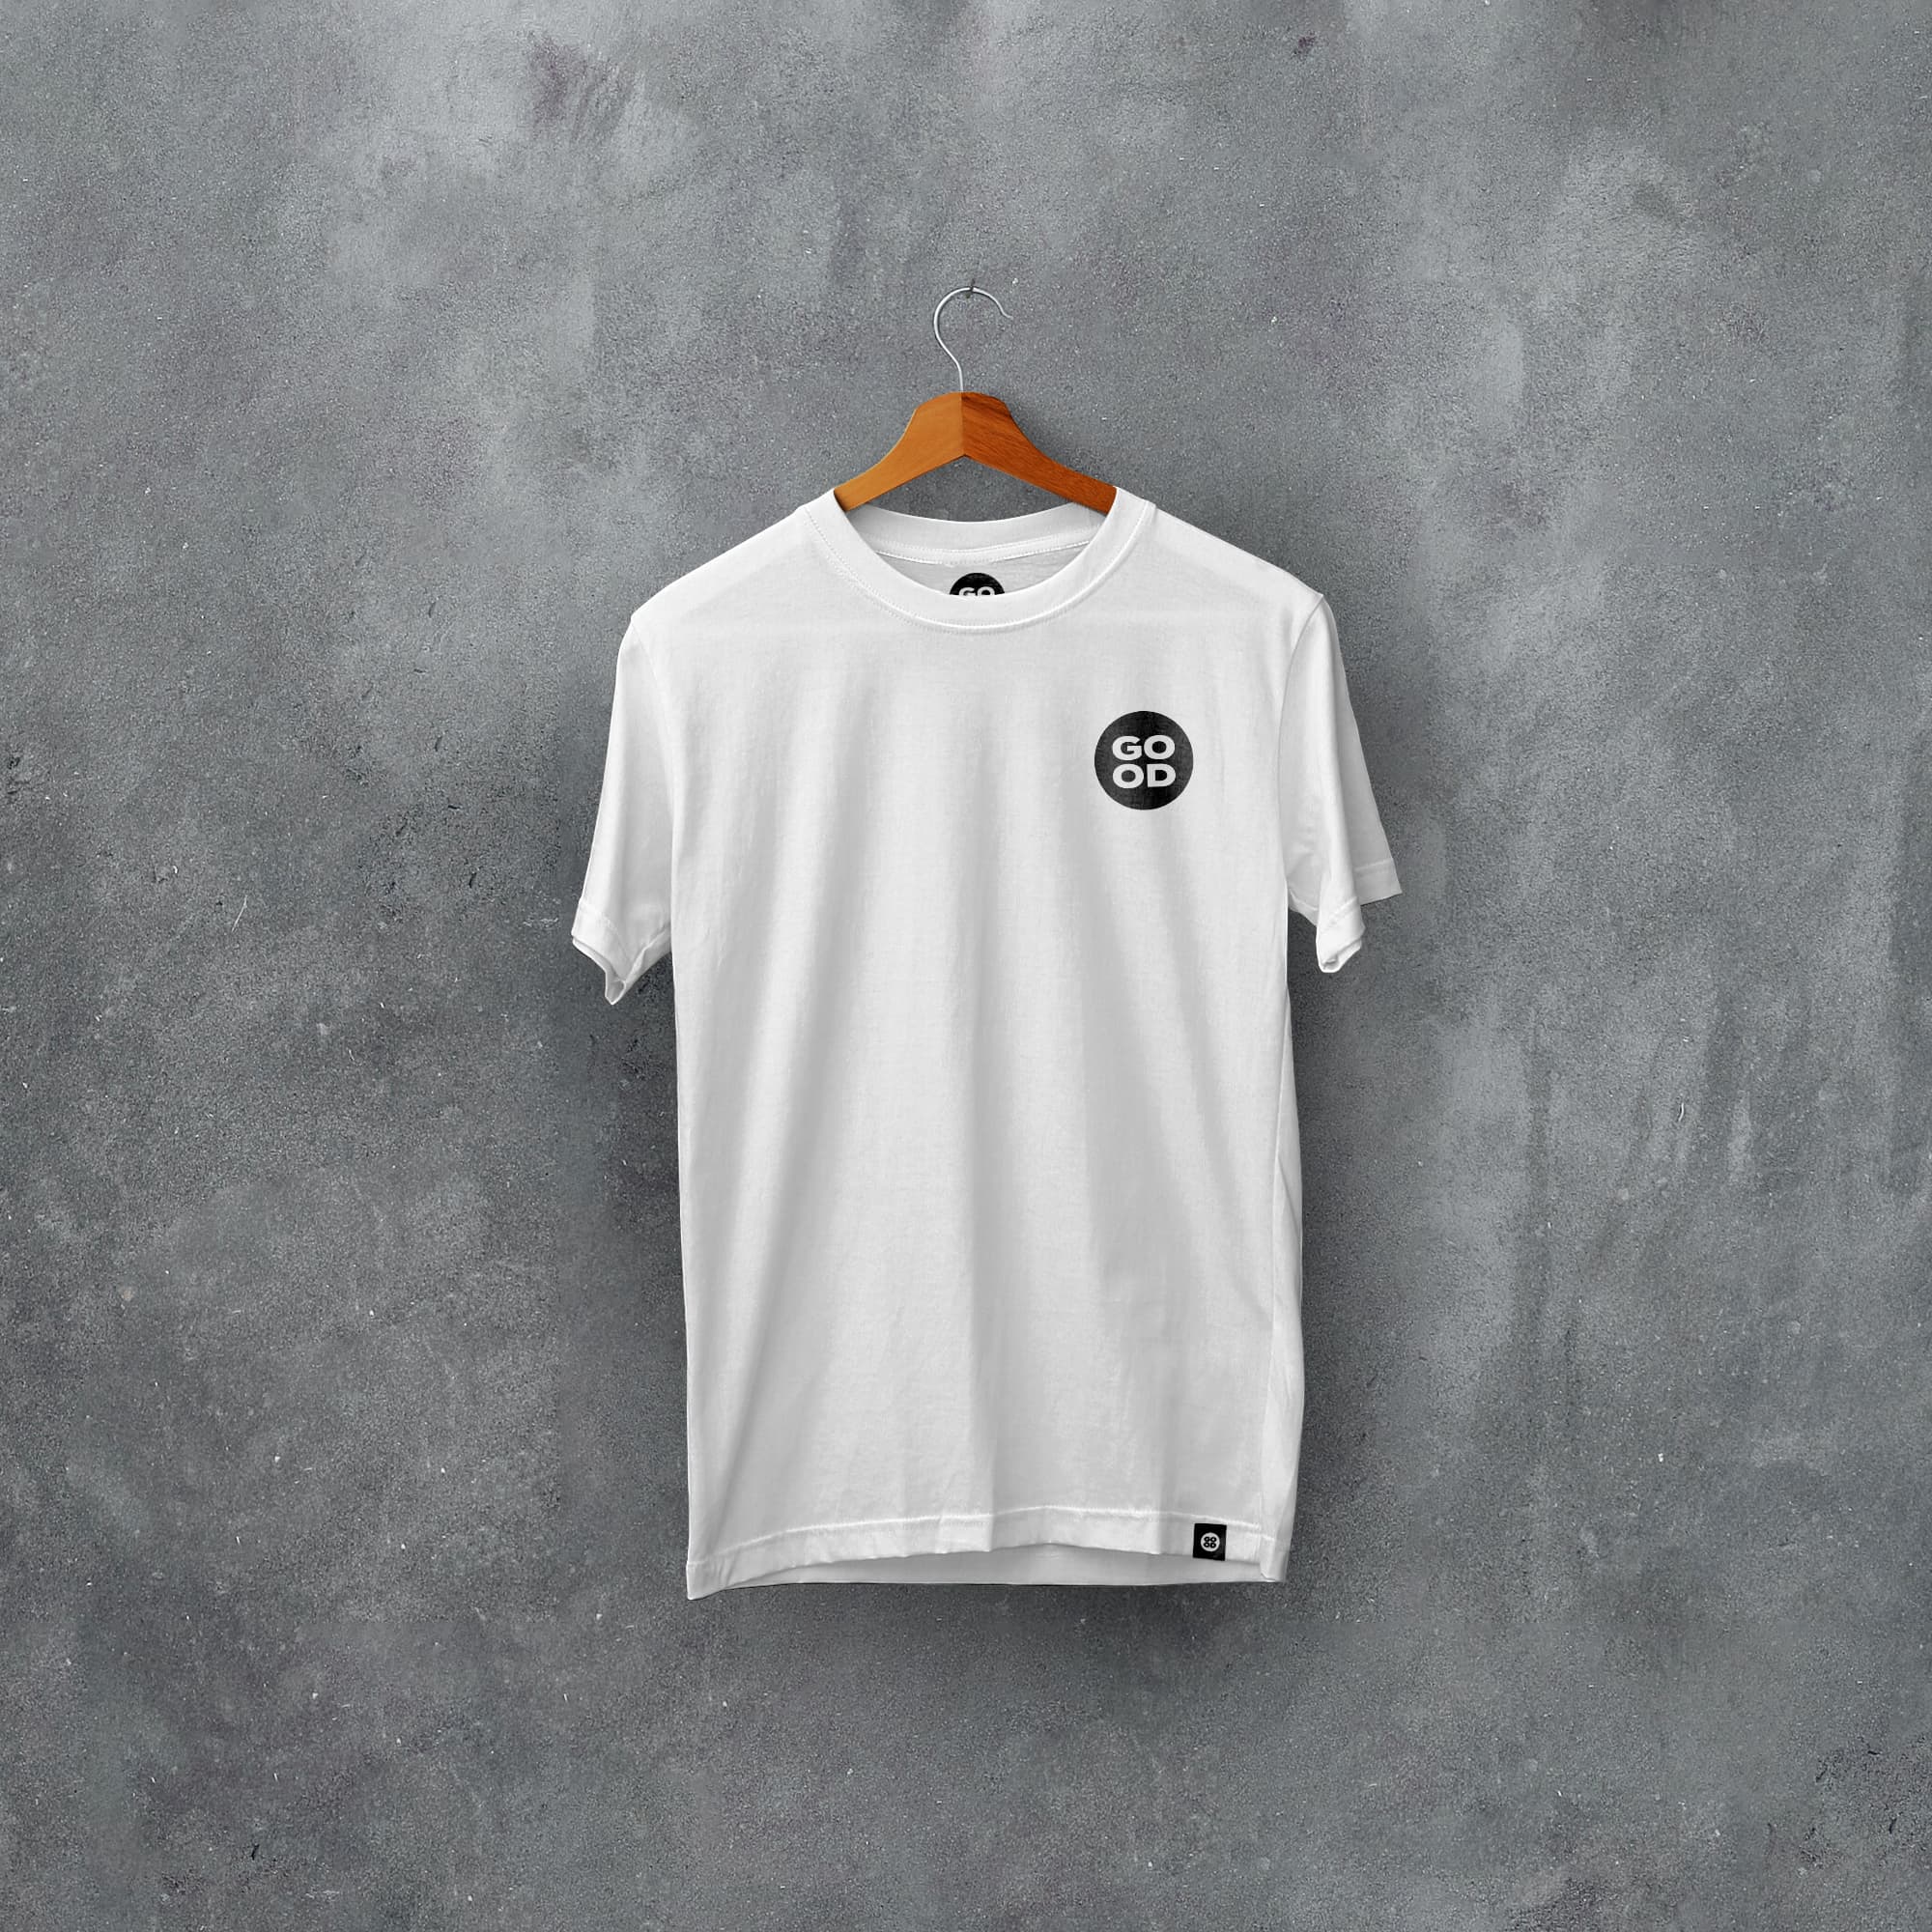 Napoli Classic Kits Football T-Shirt